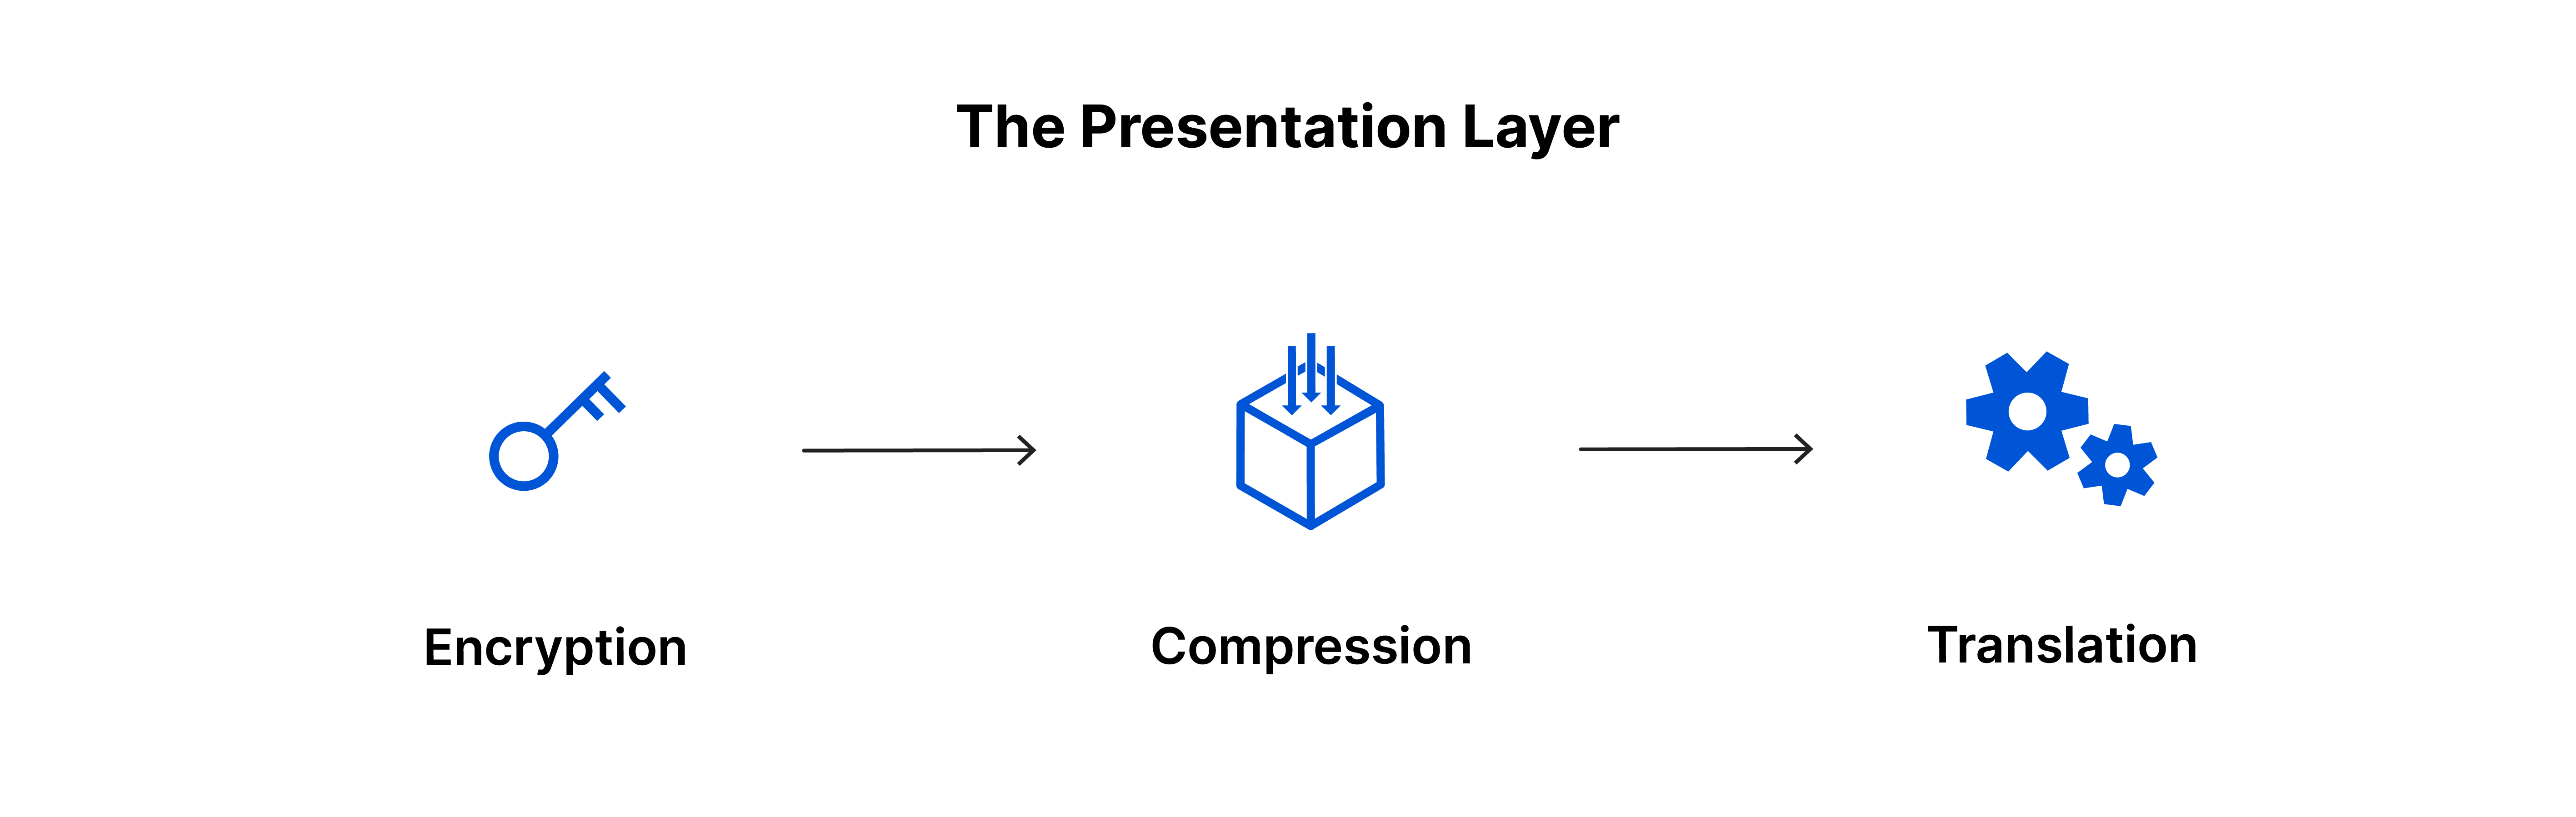 The Presentation Layer: encryption, compression, translation